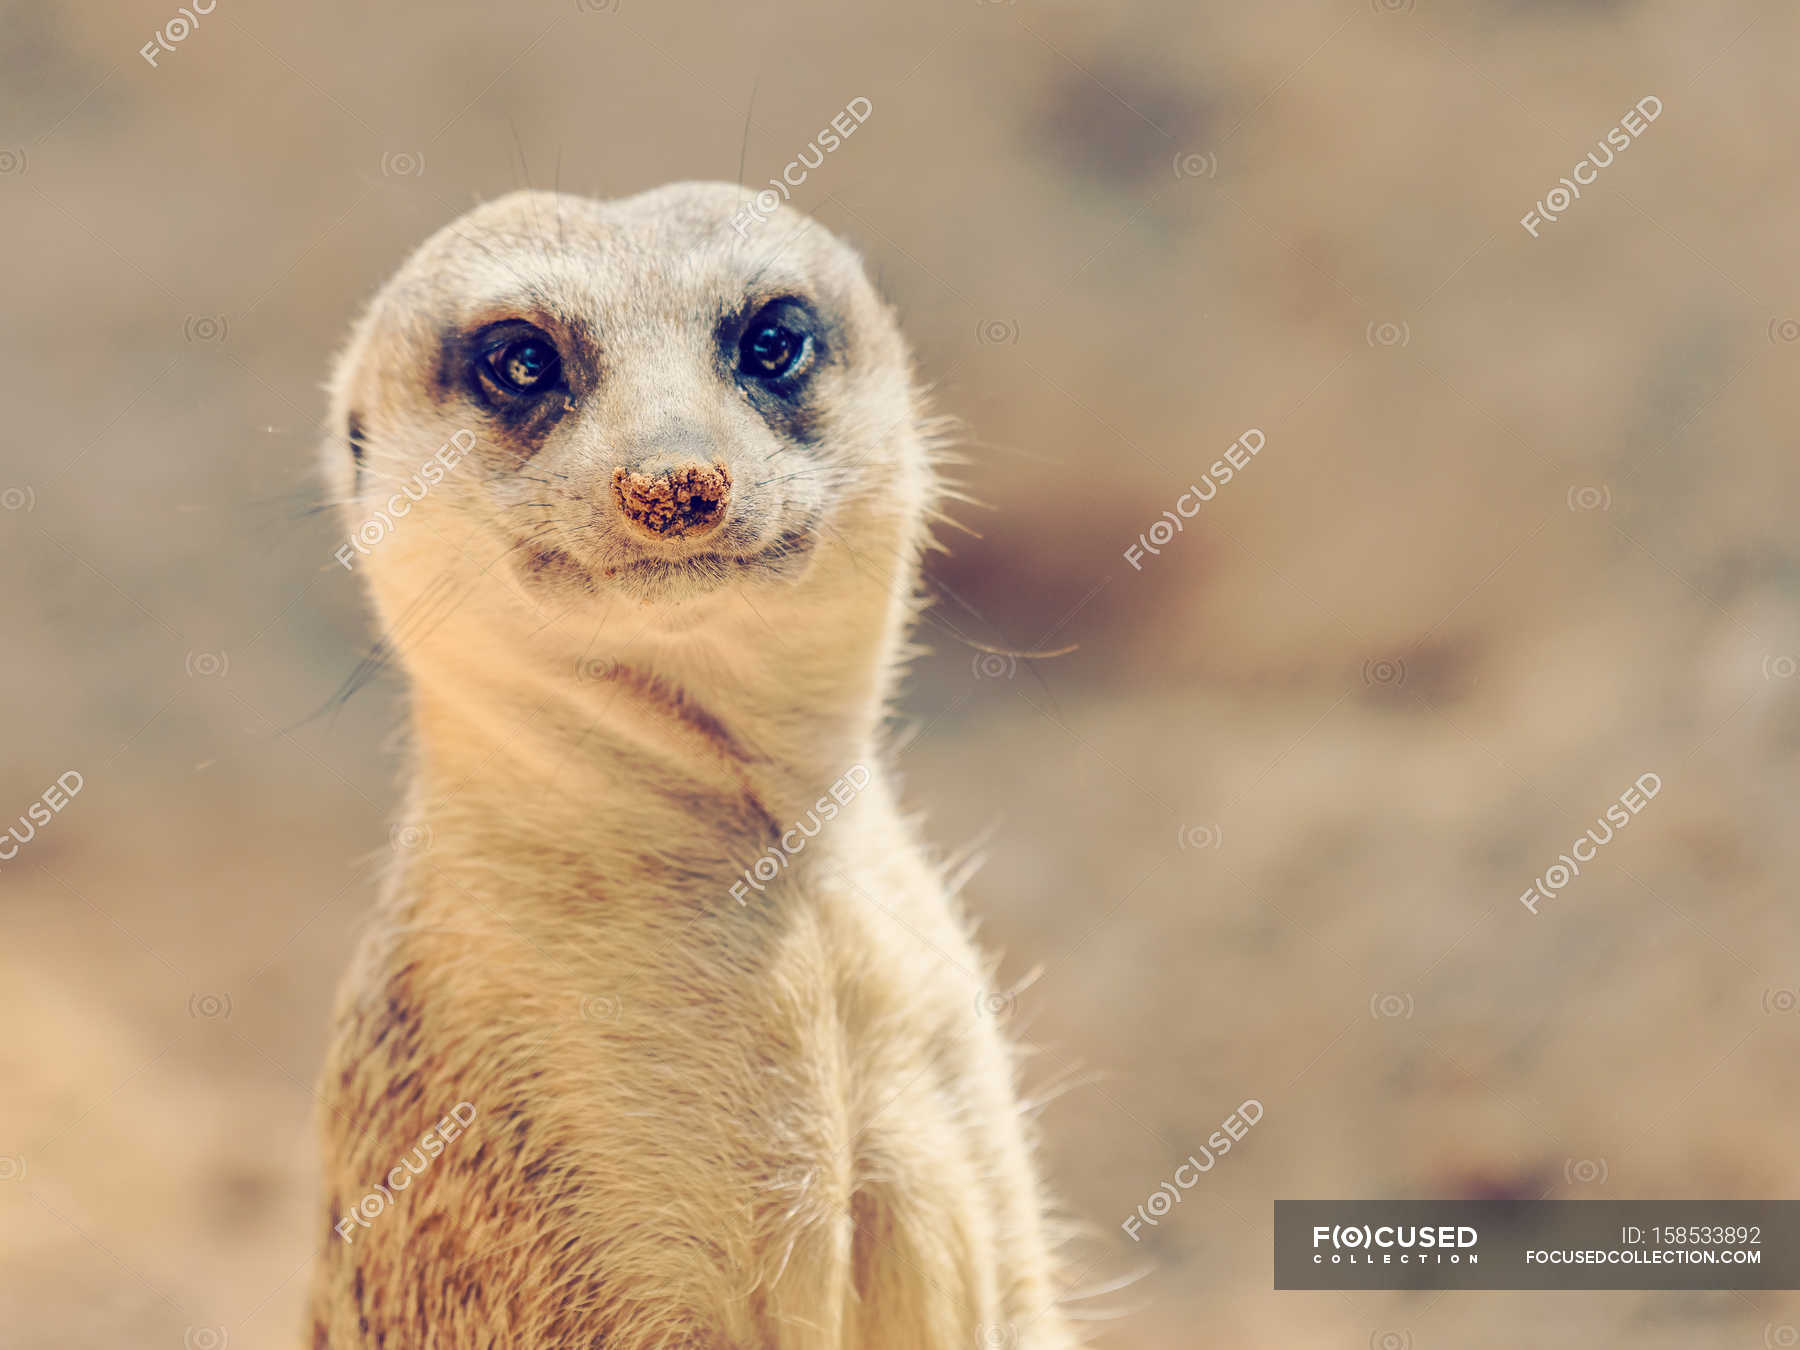 Meerkat or Suricate in Africa — Stock Photo | #158533892